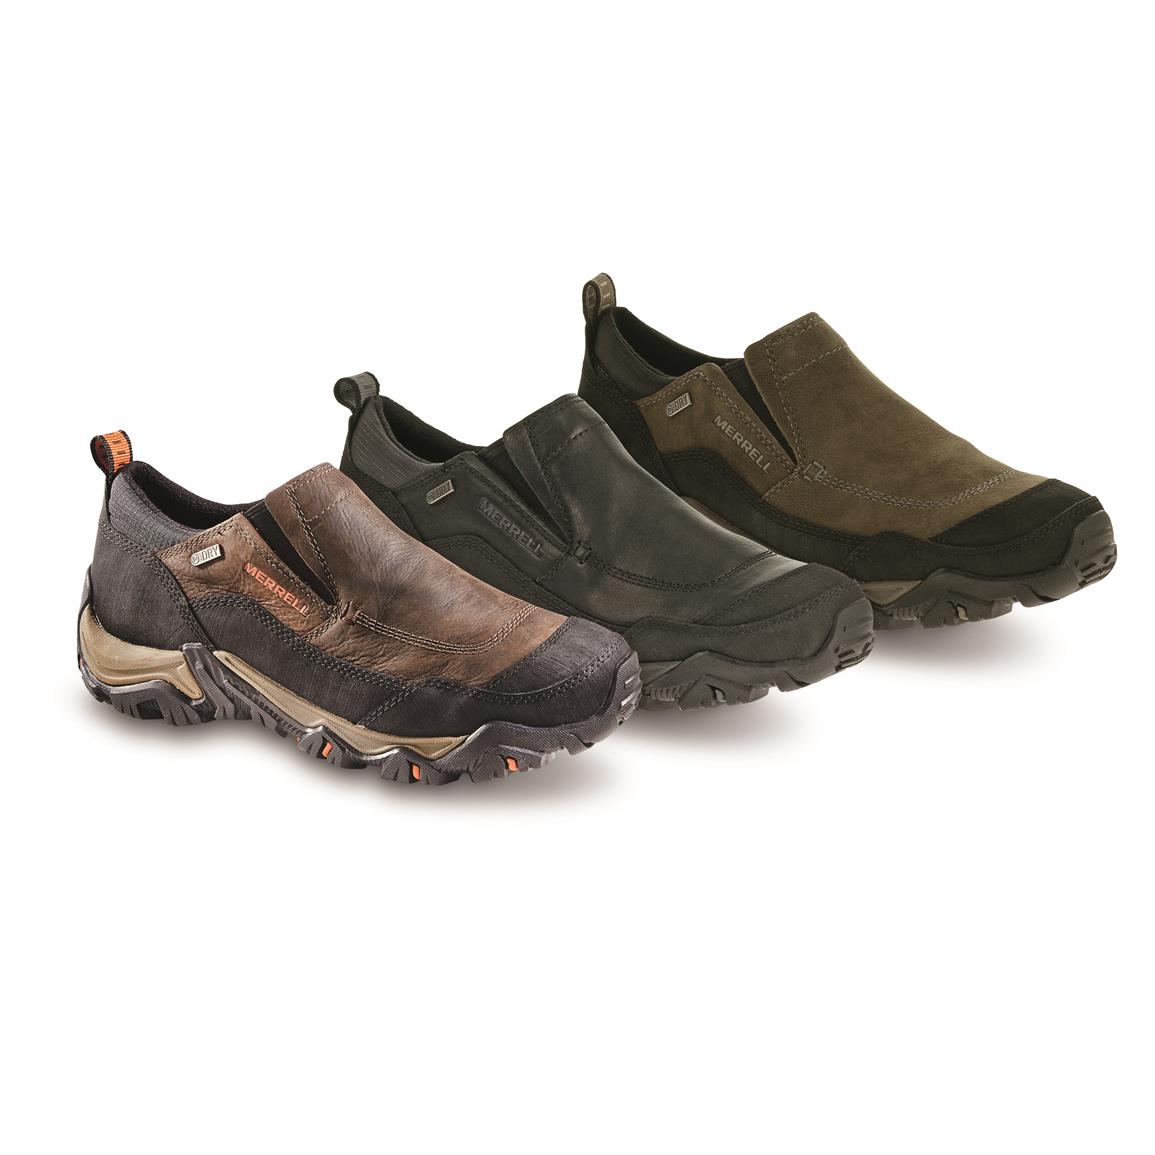 Merrell Men's Polarand Rove Waterproof Moc Toe Slip-On Shoes - 640111 ...